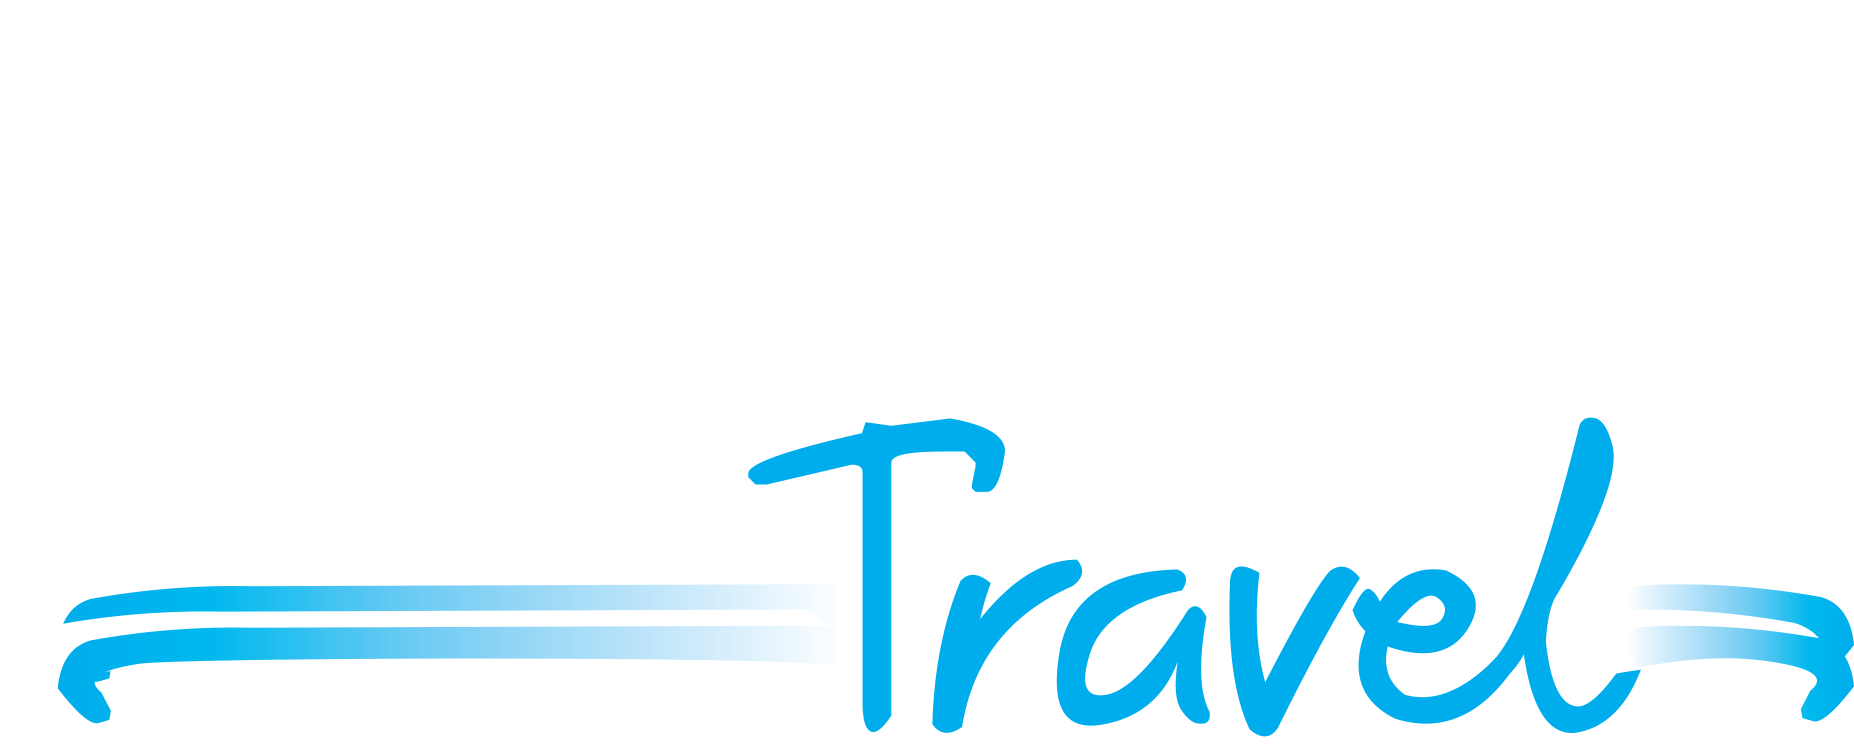 Hammer Travel